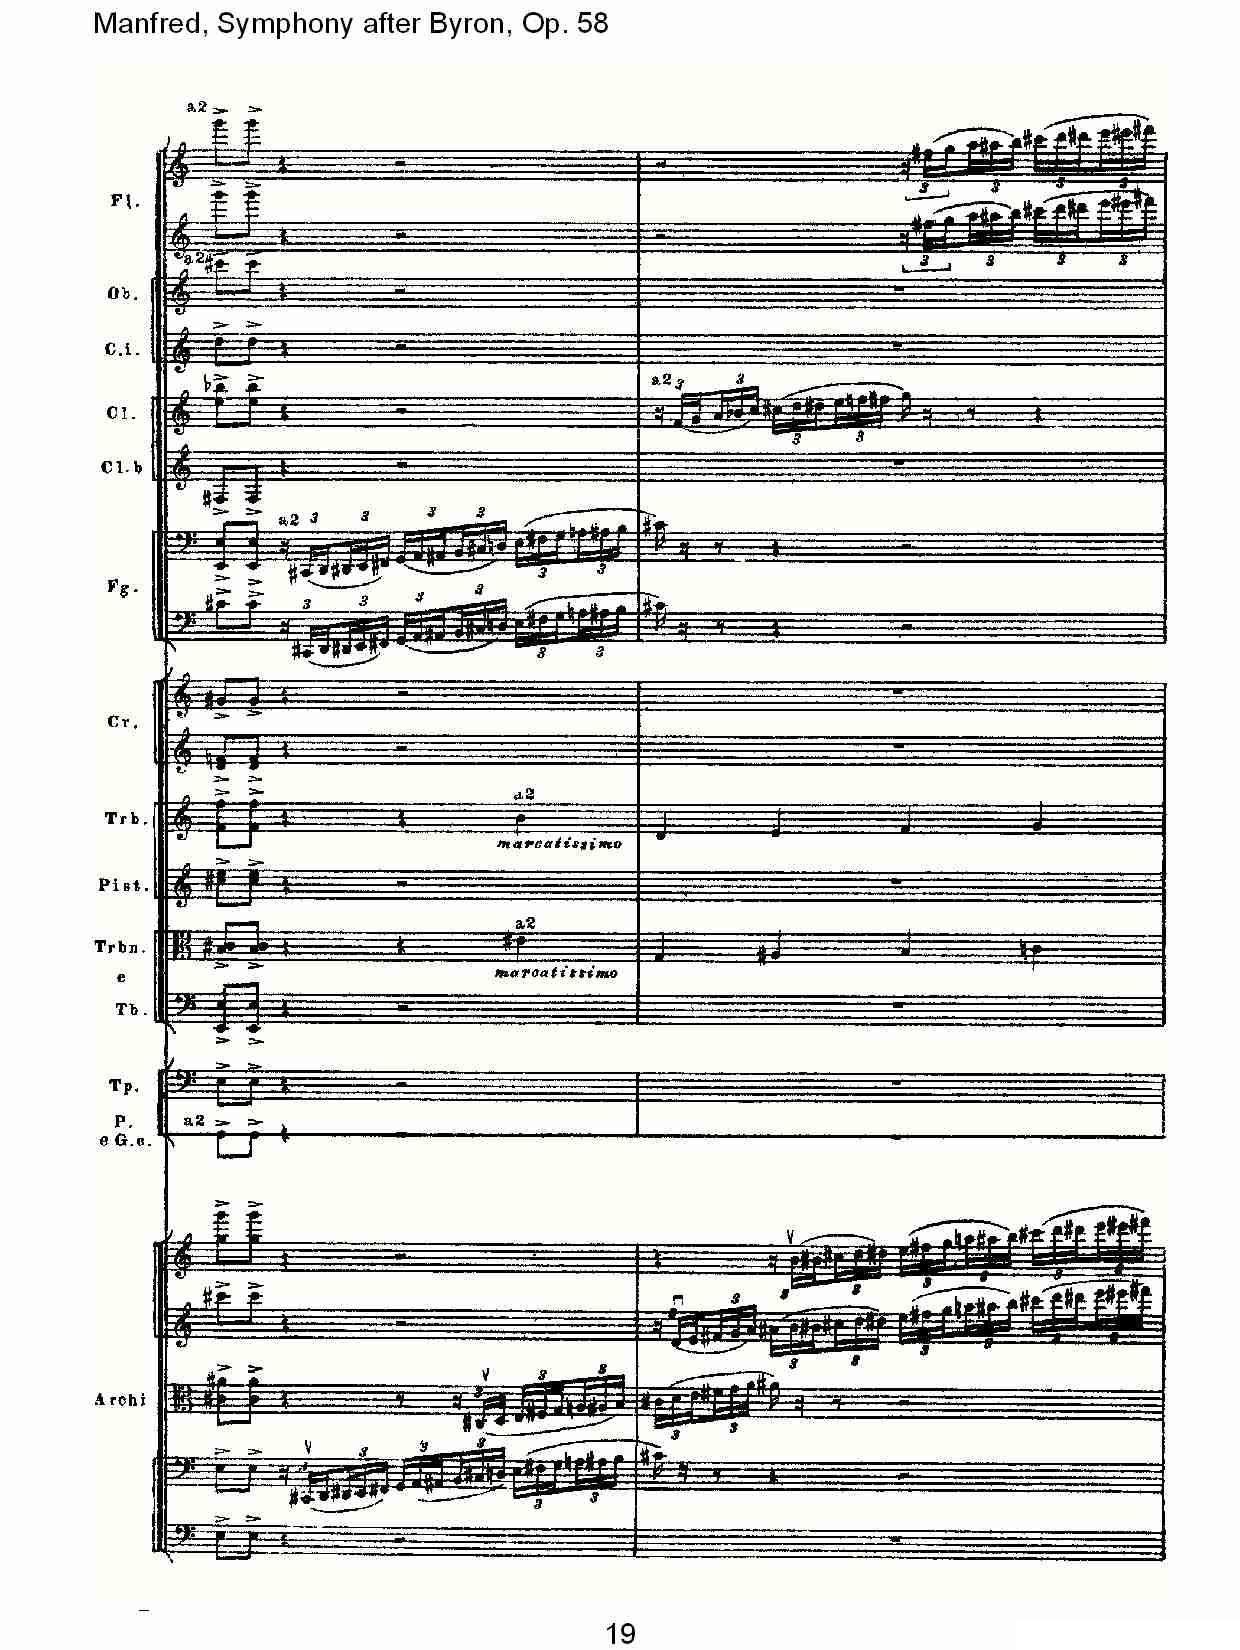 Manfred, Symphony after Byron, Op.58第一乐章（一）其它曲谱（图19）